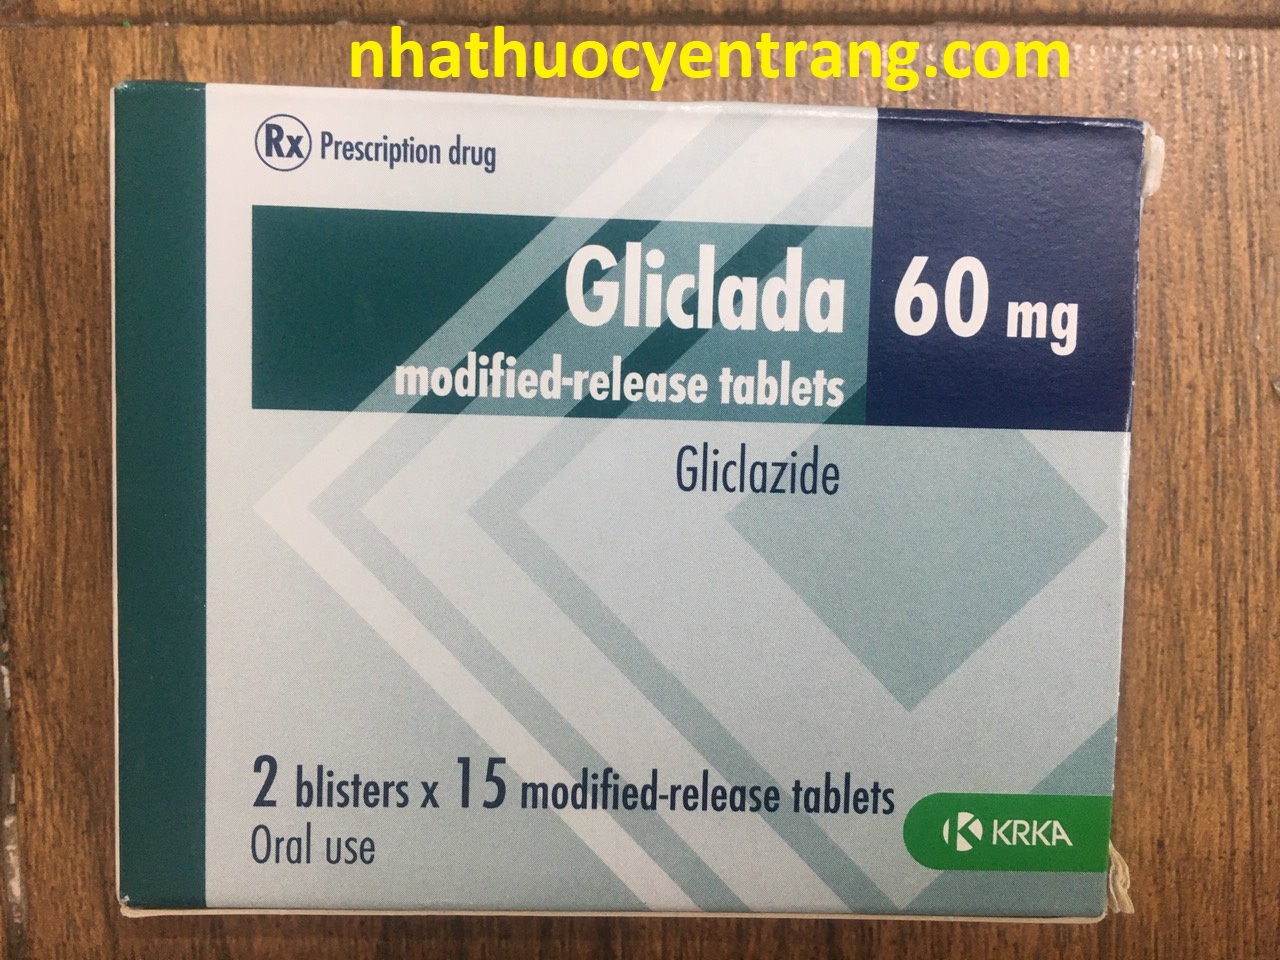 Gliclada 60mg